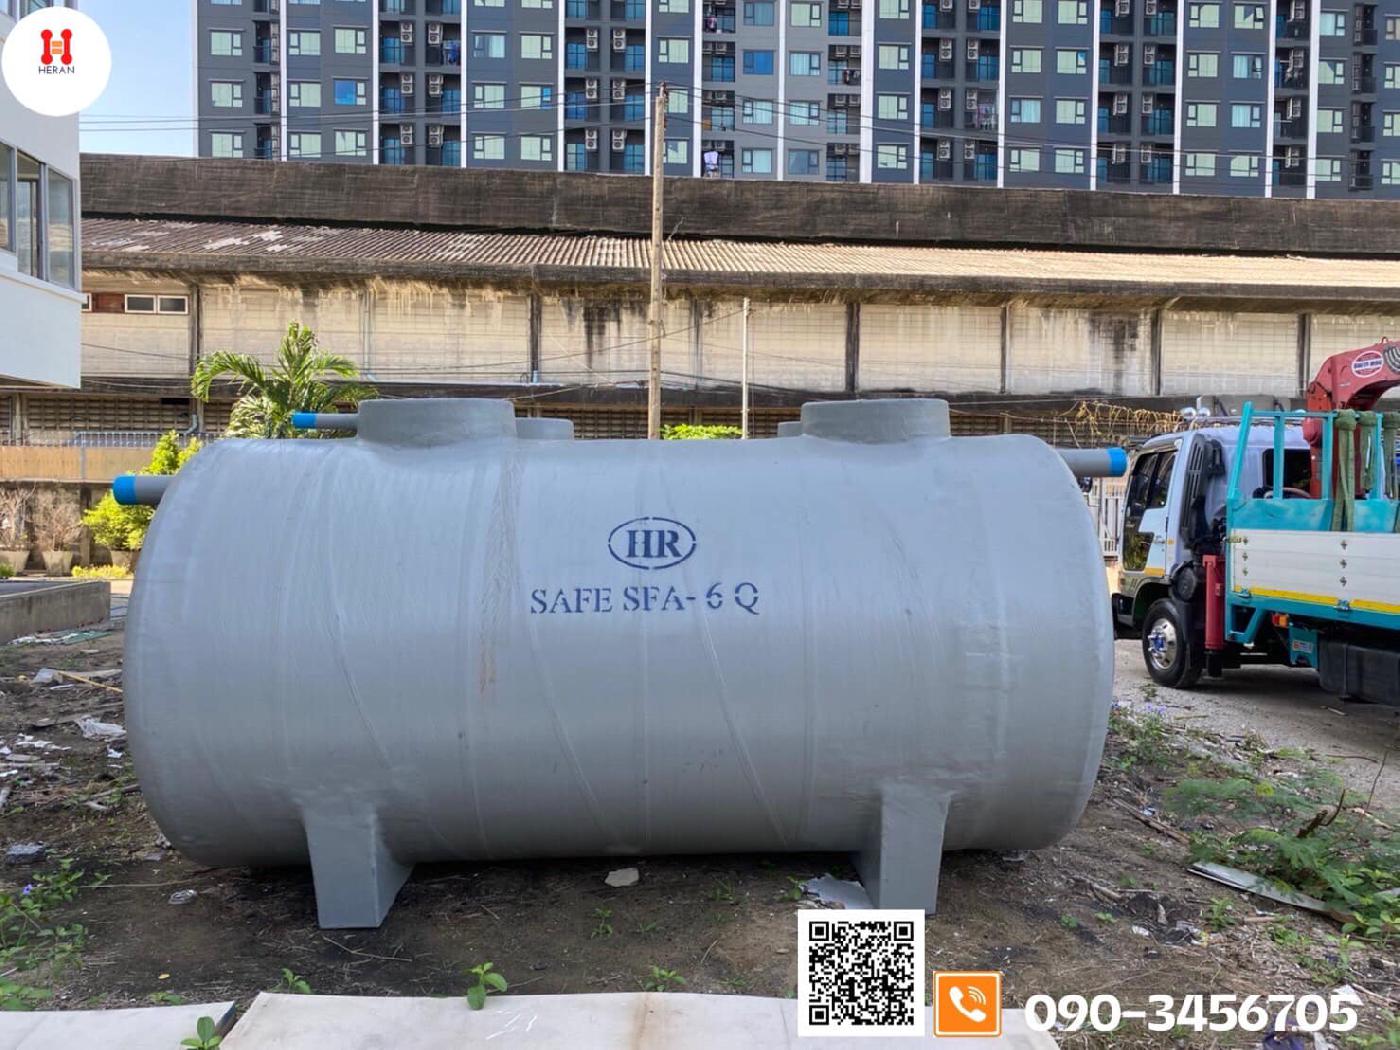 Sending septic tank work. Size 6,000 liters. 4 sets. HR brand.